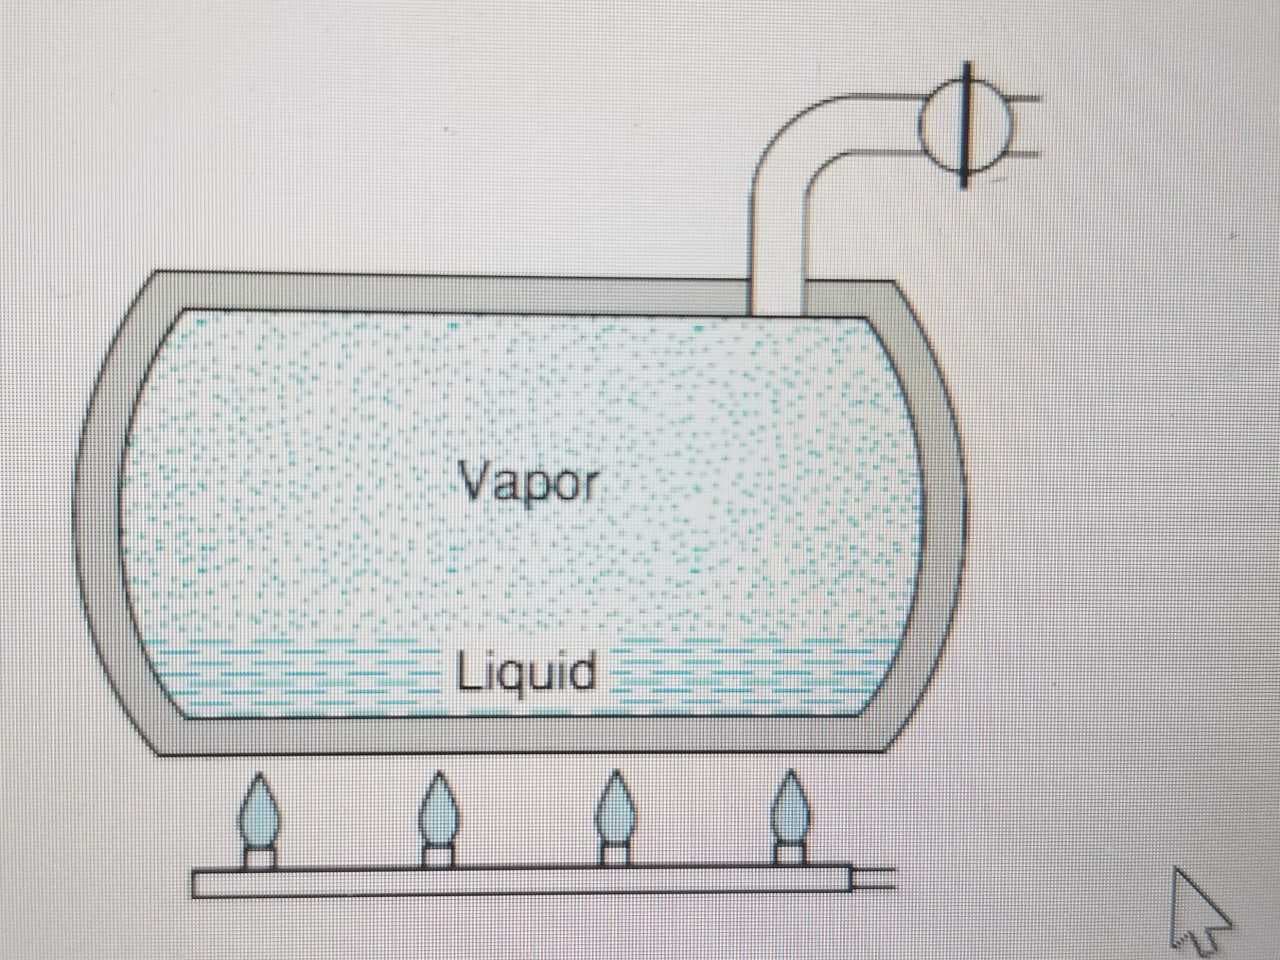 Vapor
Liquid
